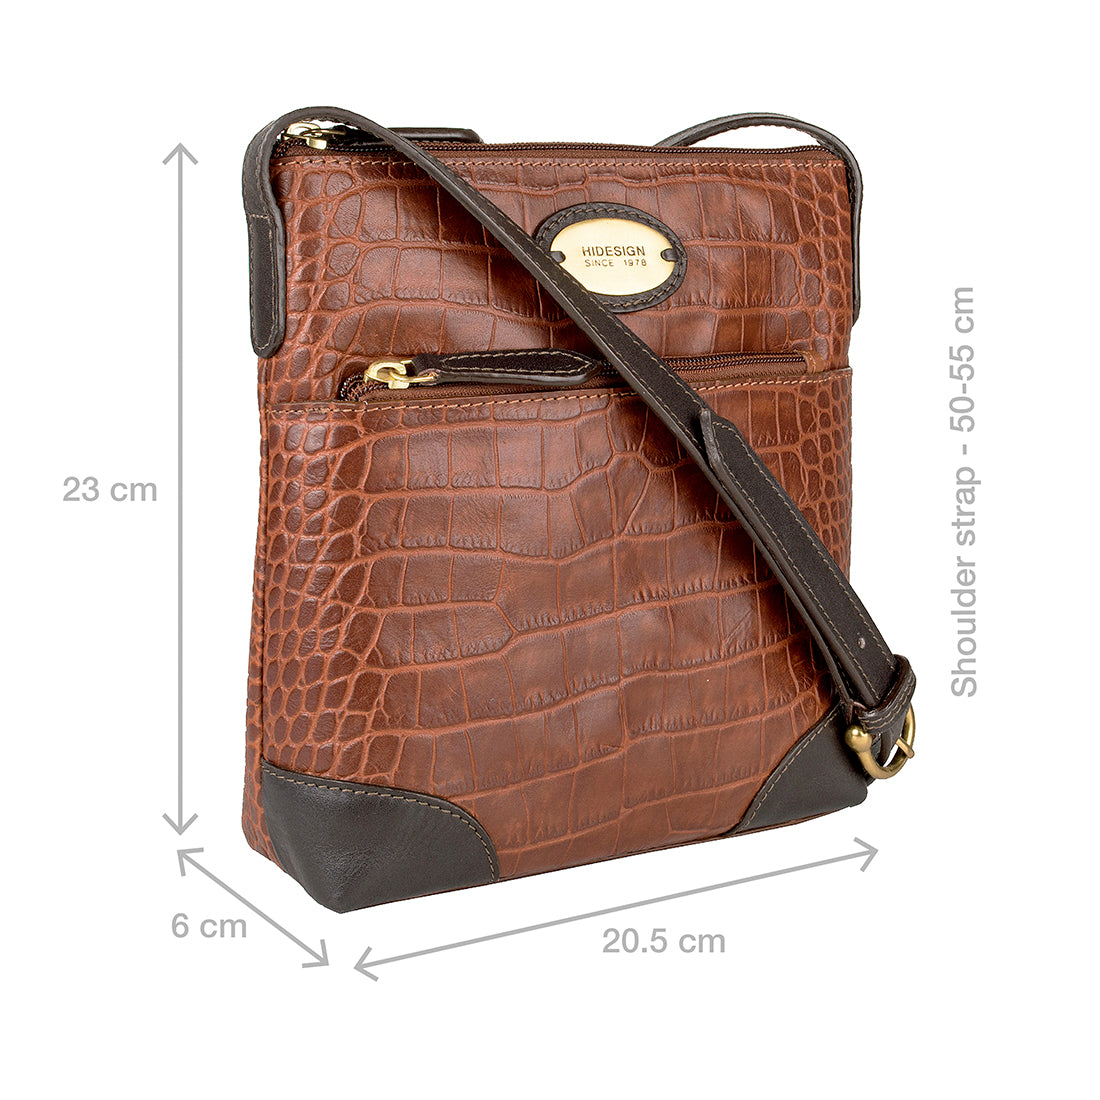 Buy Pink Panama 02 Sling Bag Online - Hidesign